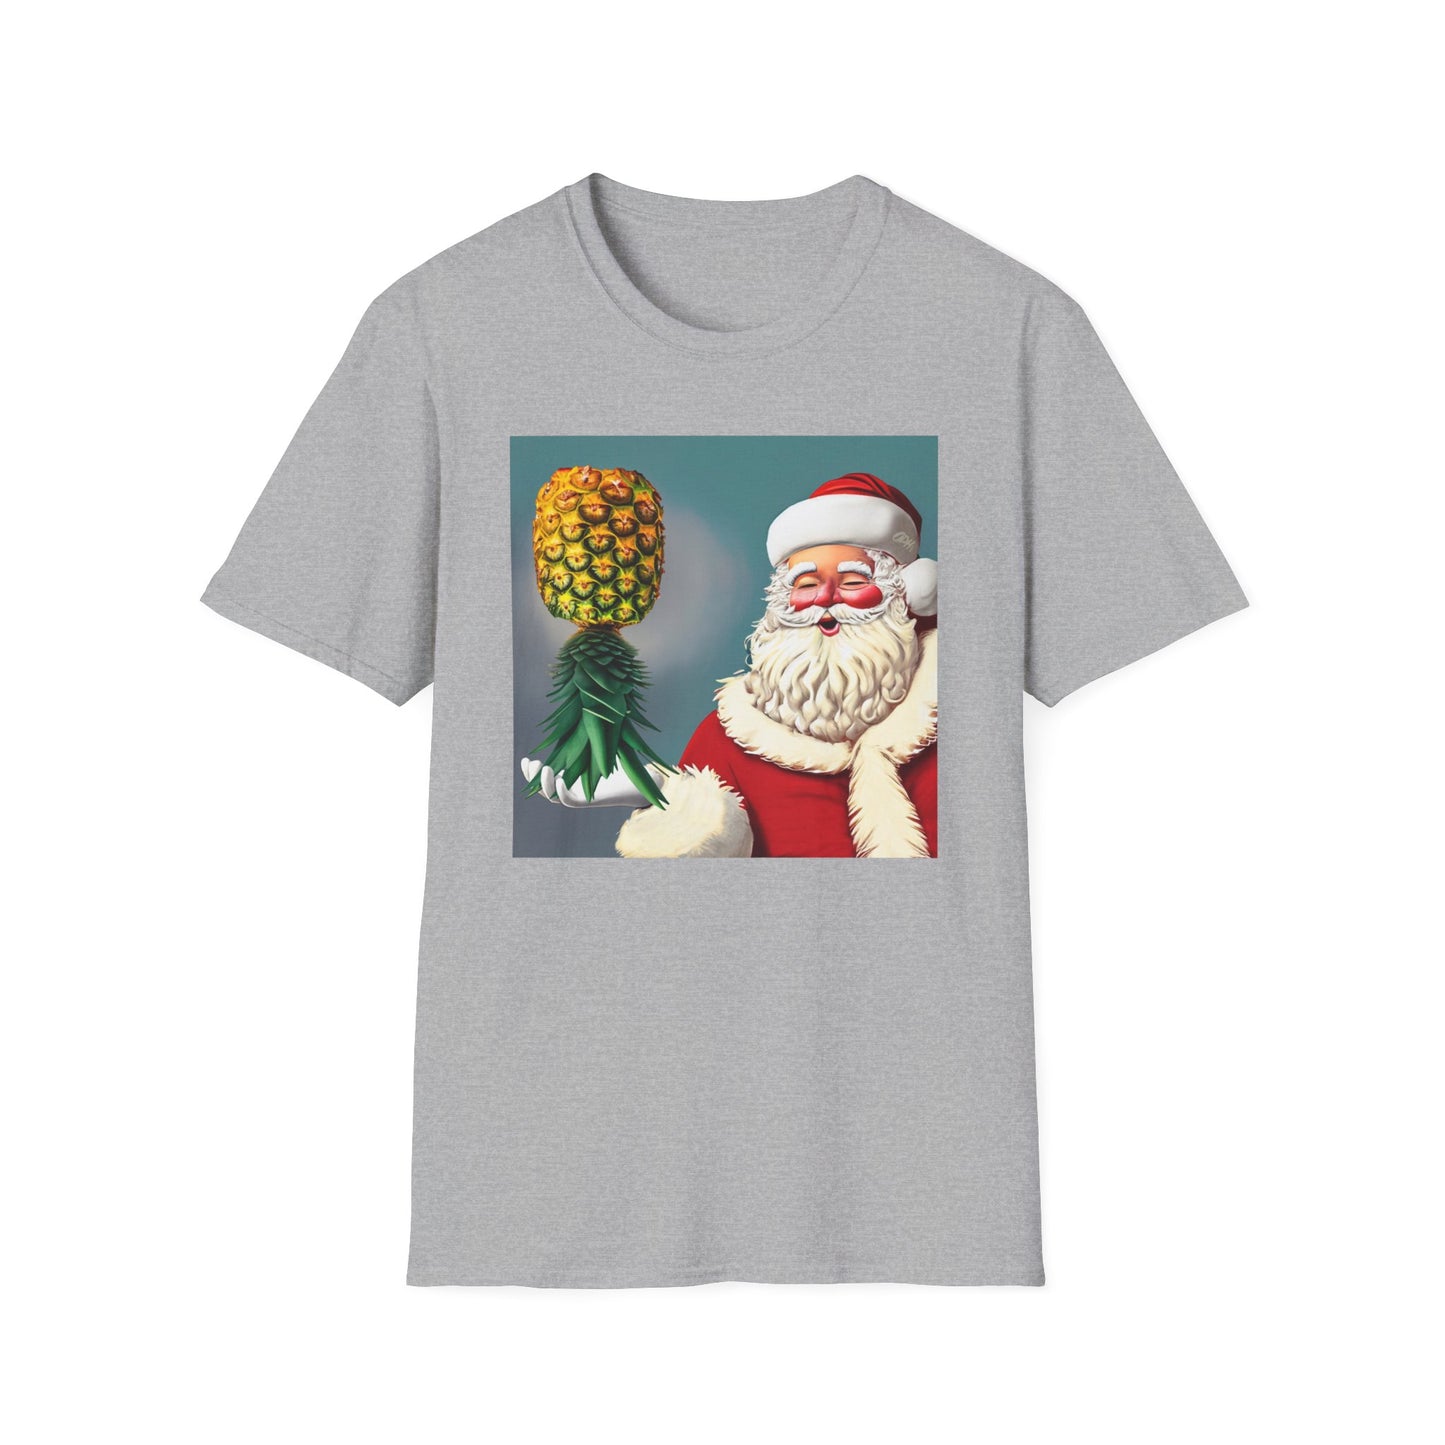 Upside Down Pineapple Santa Claus Short Sleeve Shirt, Christmas Tee, Upside Down Pineapple T-shirt, Swingers Pullover Clothing, Swinger